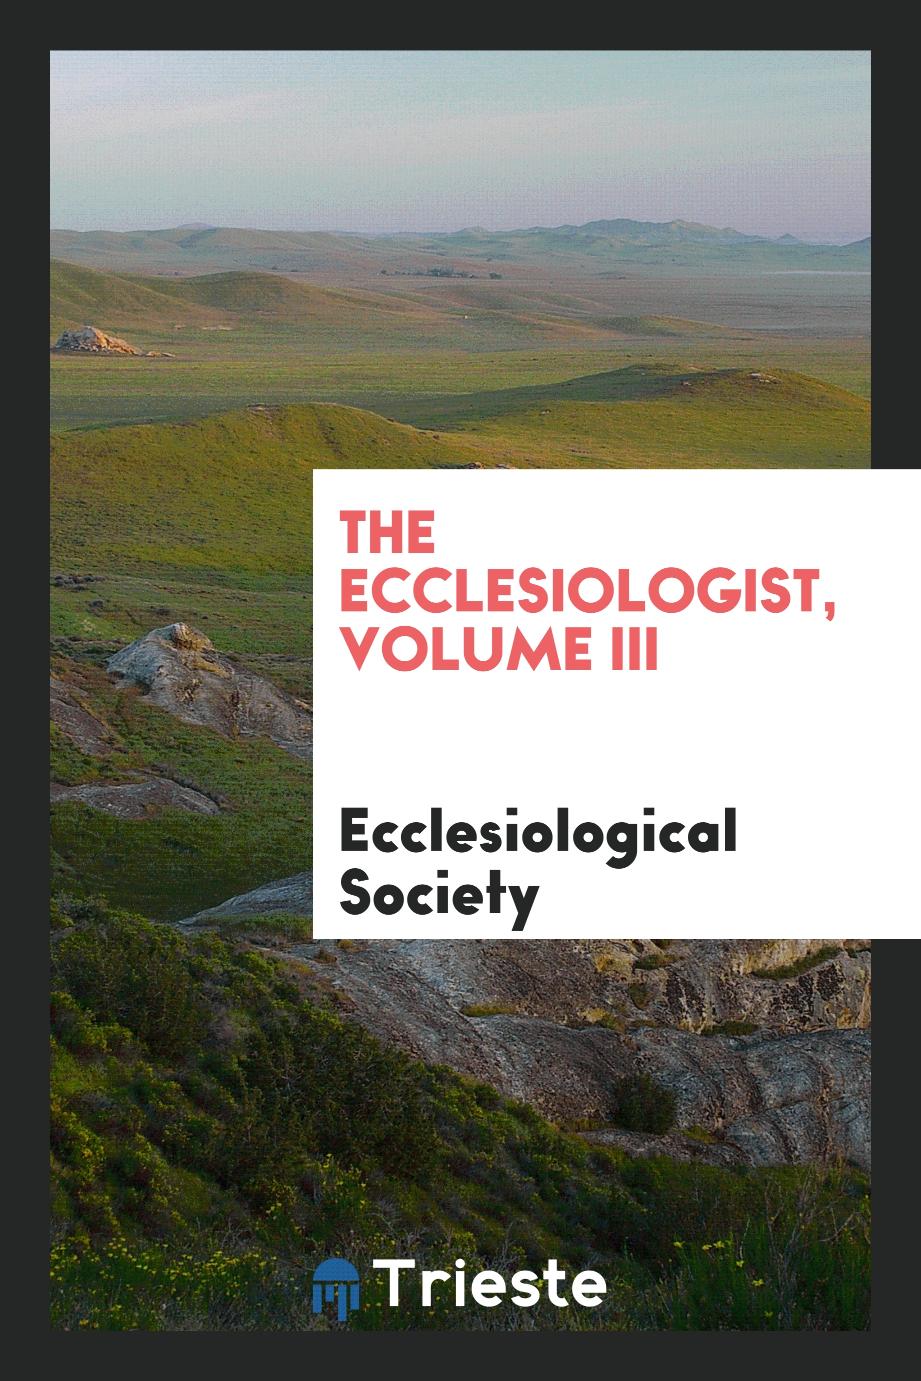 The Ecclesiologist, Volume III